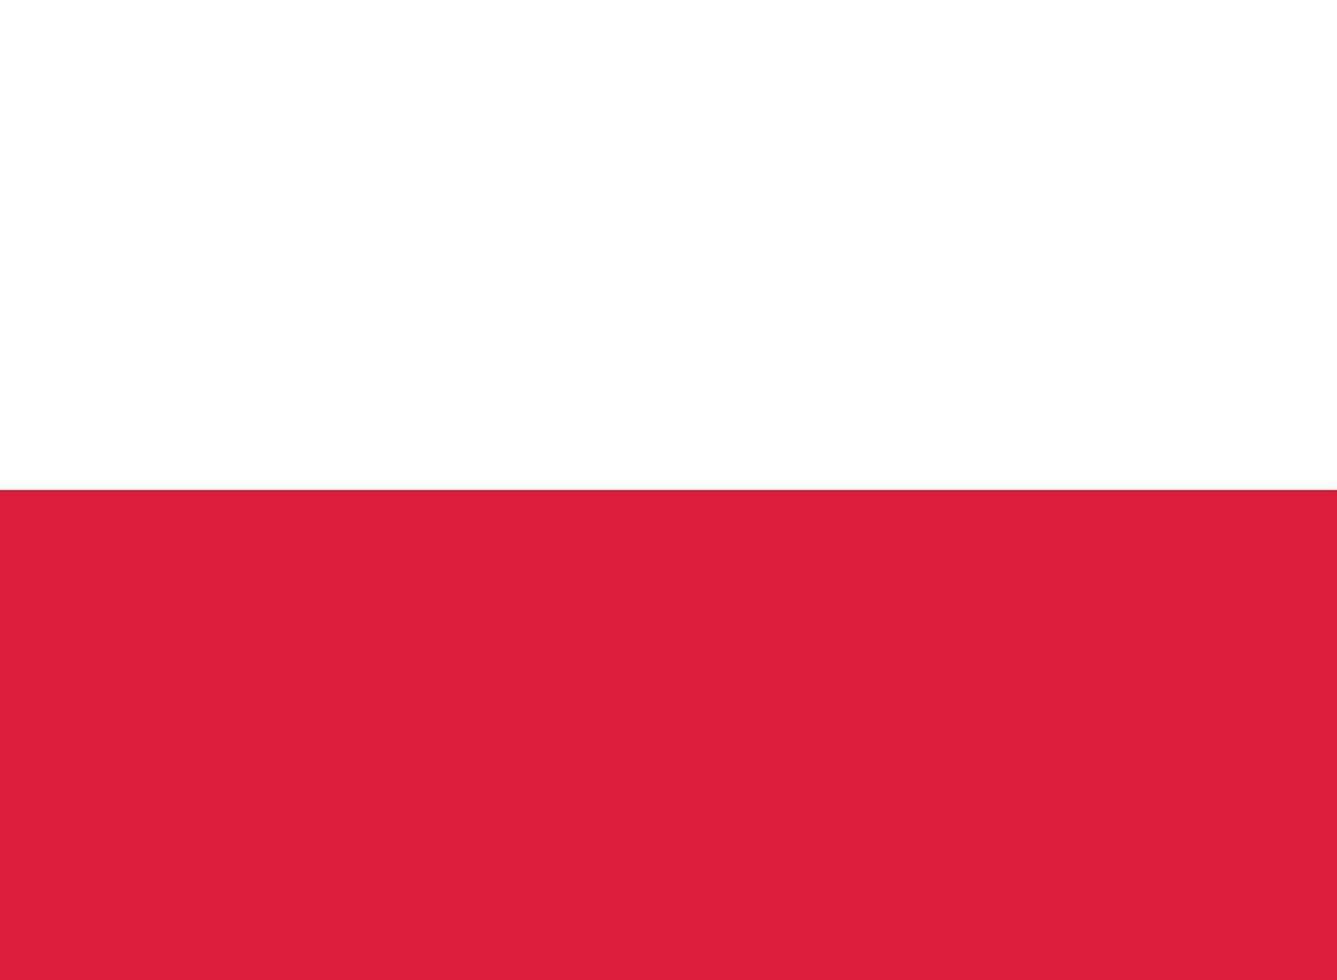 Poland flag vector isolated on white background